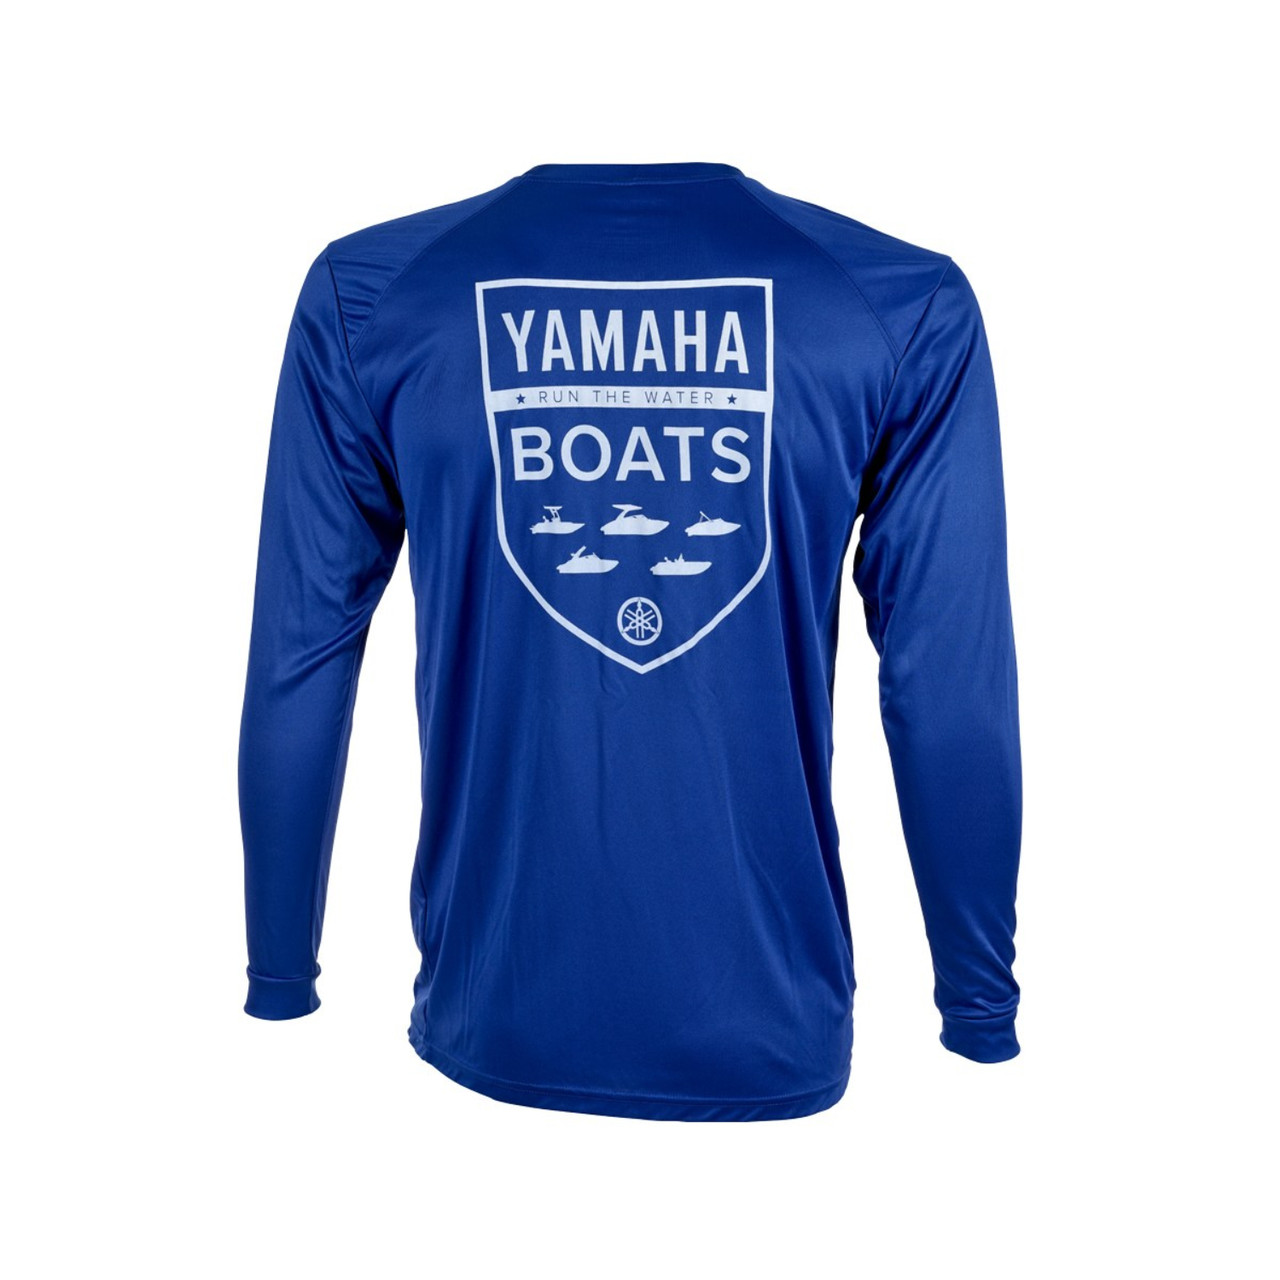 Yamaha Men's Medium Run the Water Boats Tee, WTC-20LYB-BL-MD